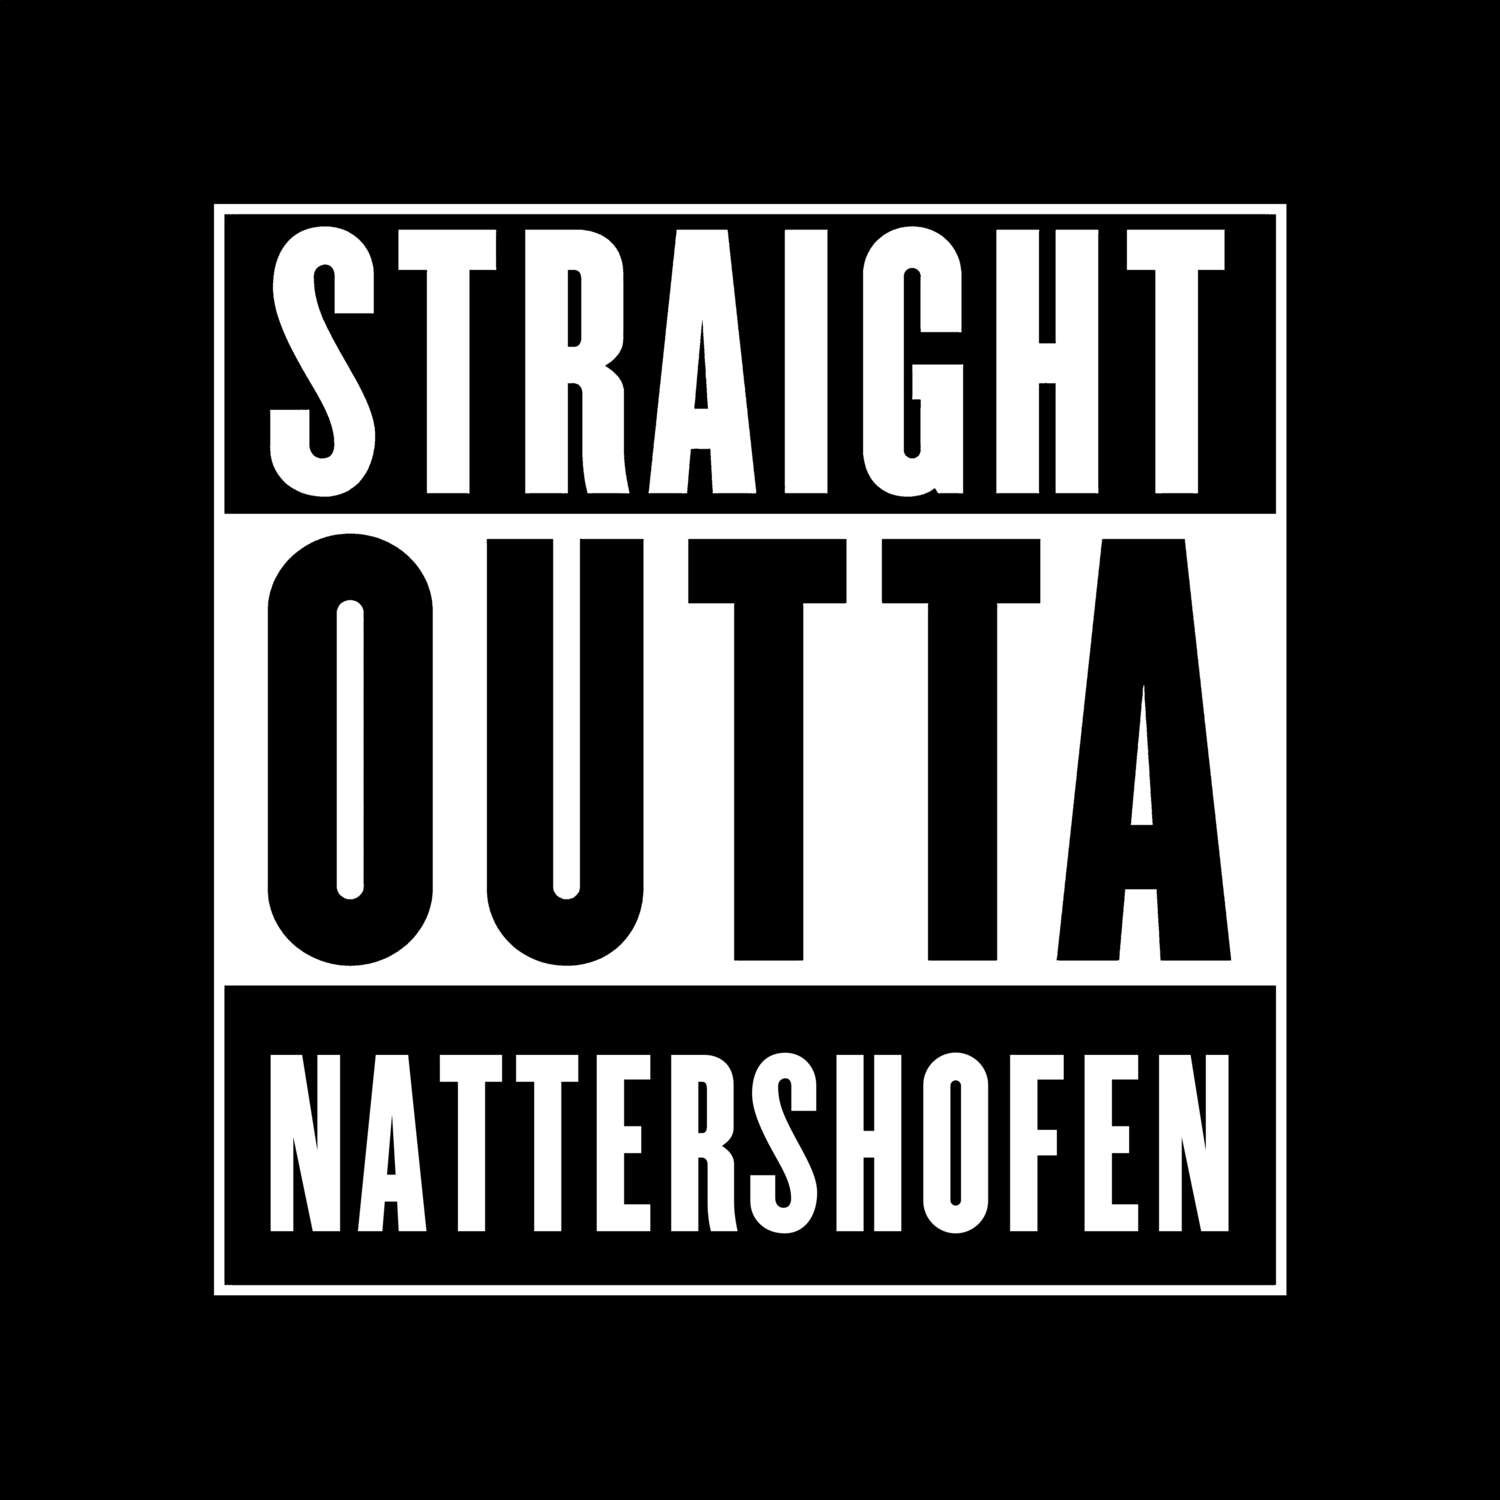 Nattershofen T-Shirt »Straight Outta«